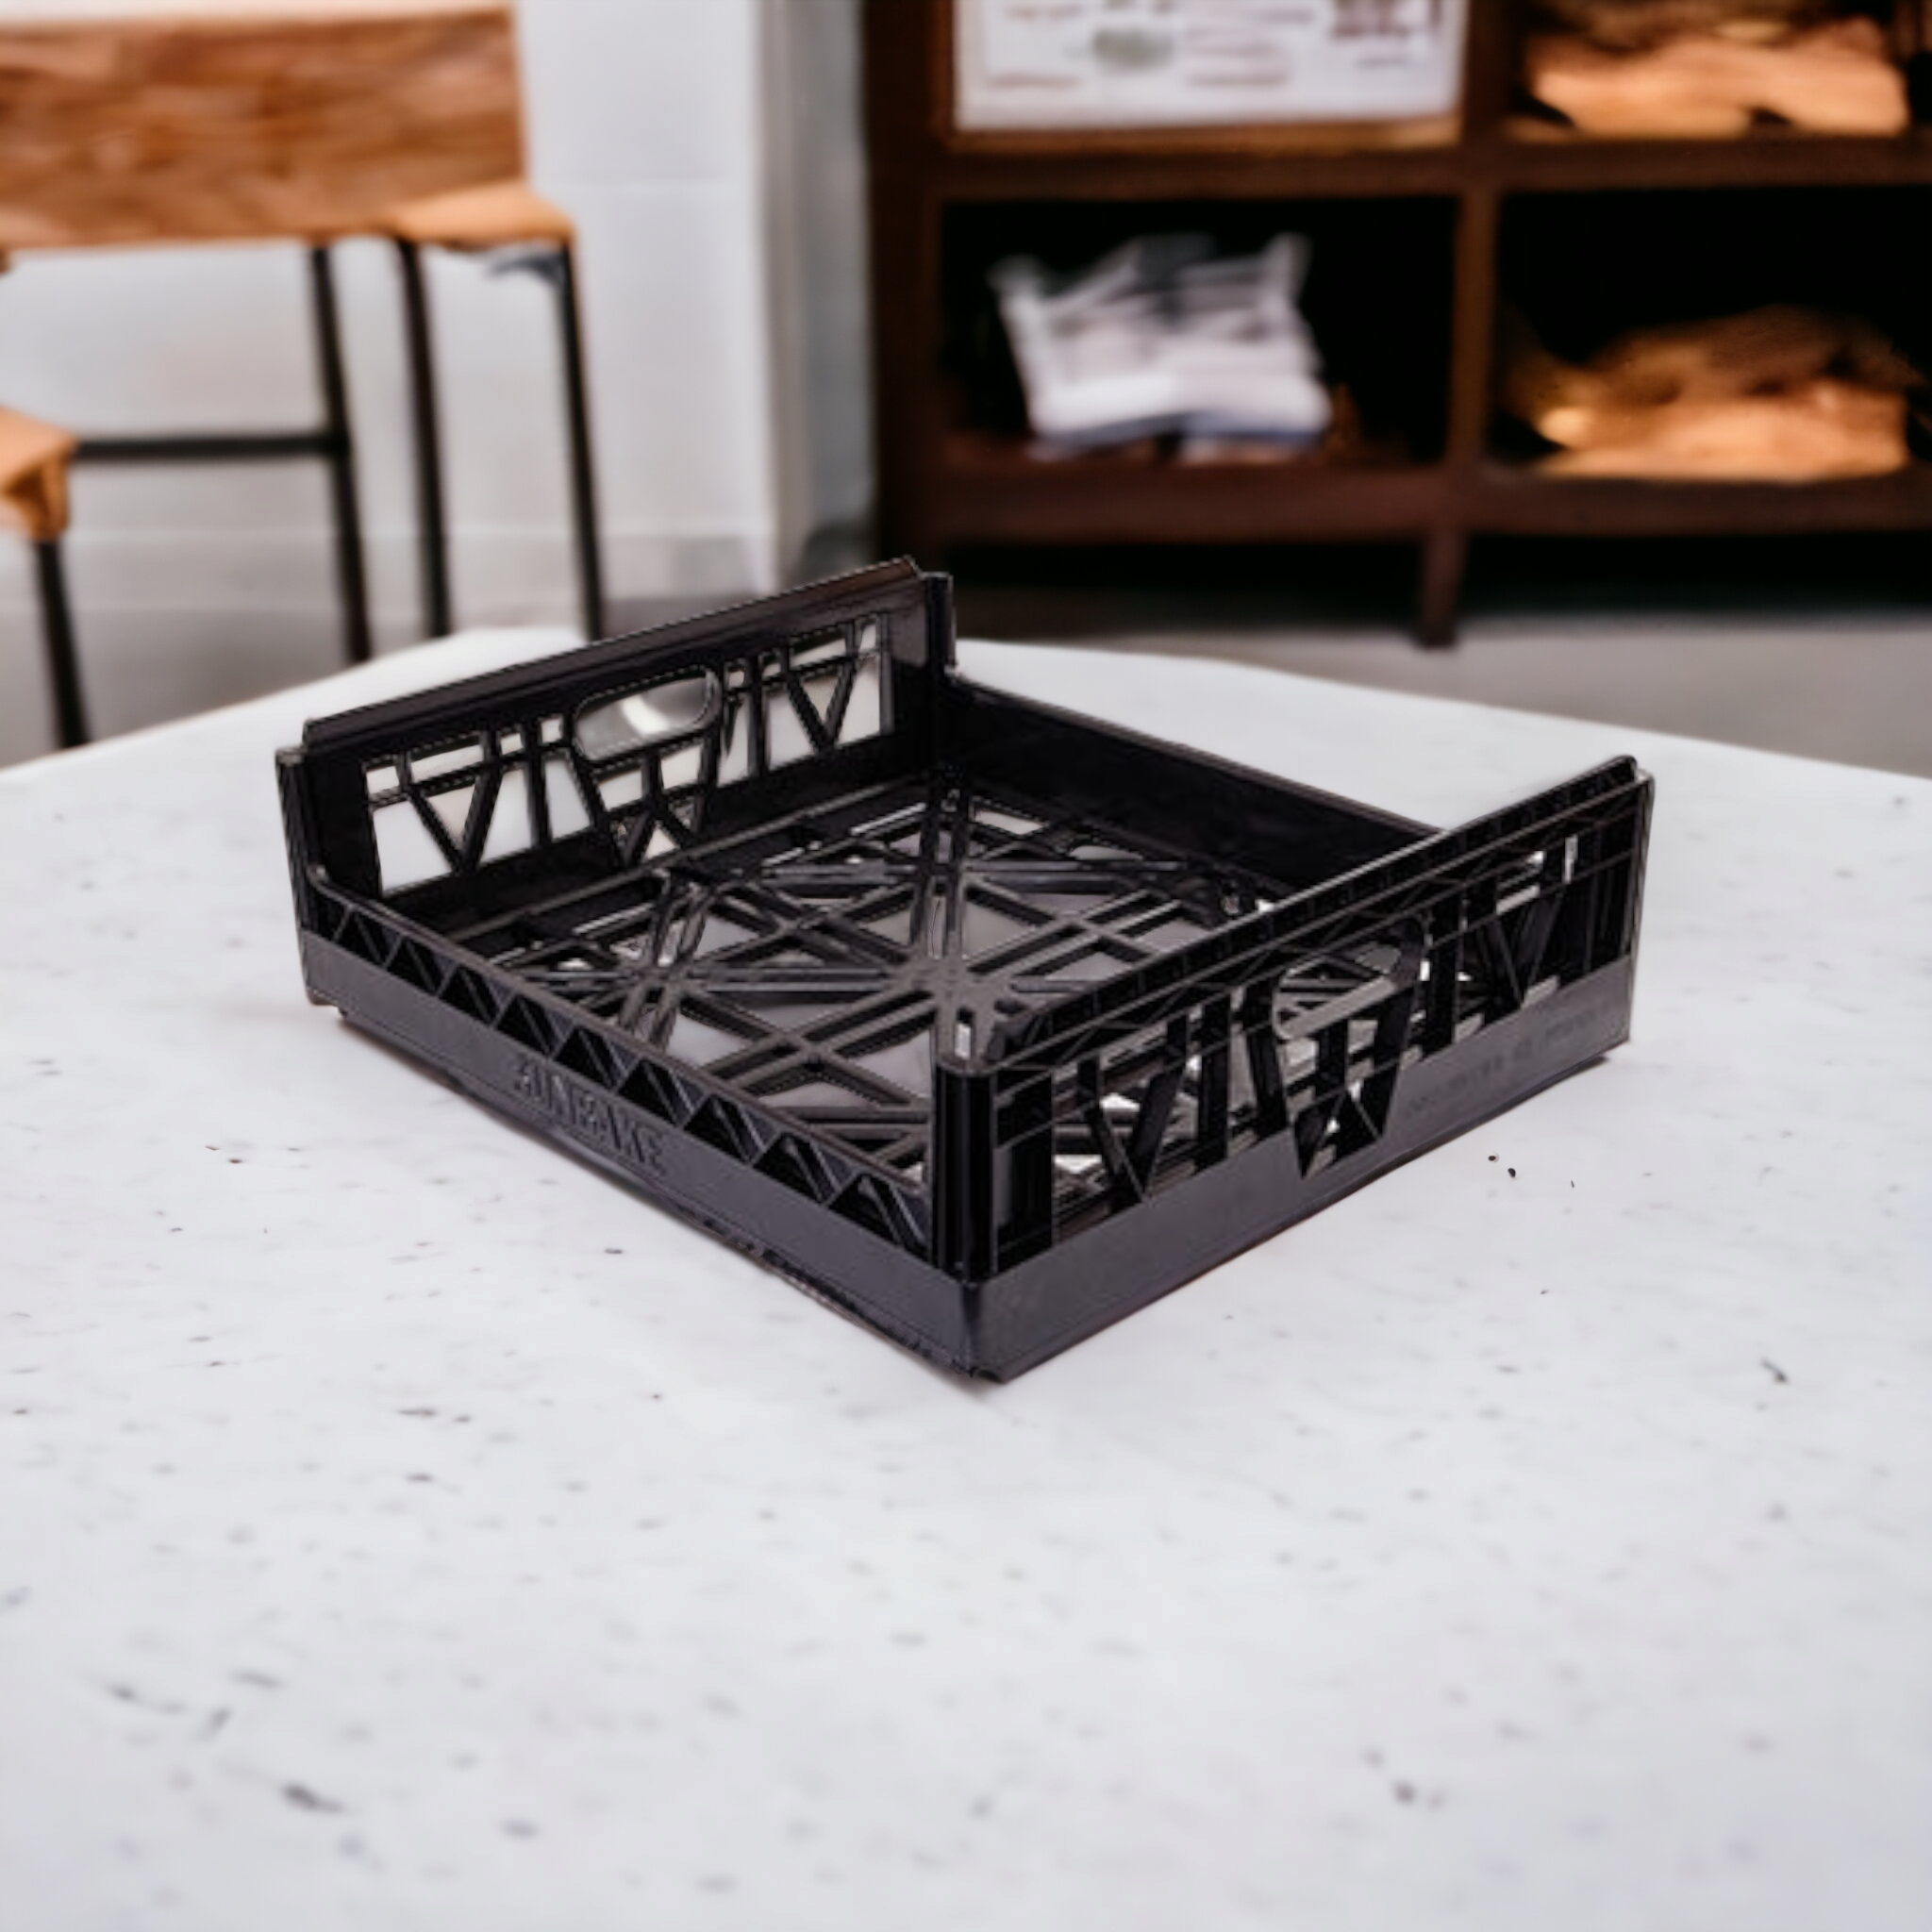 Plastic Bread Crate Tray Black - 10 Loafs 1.8KG